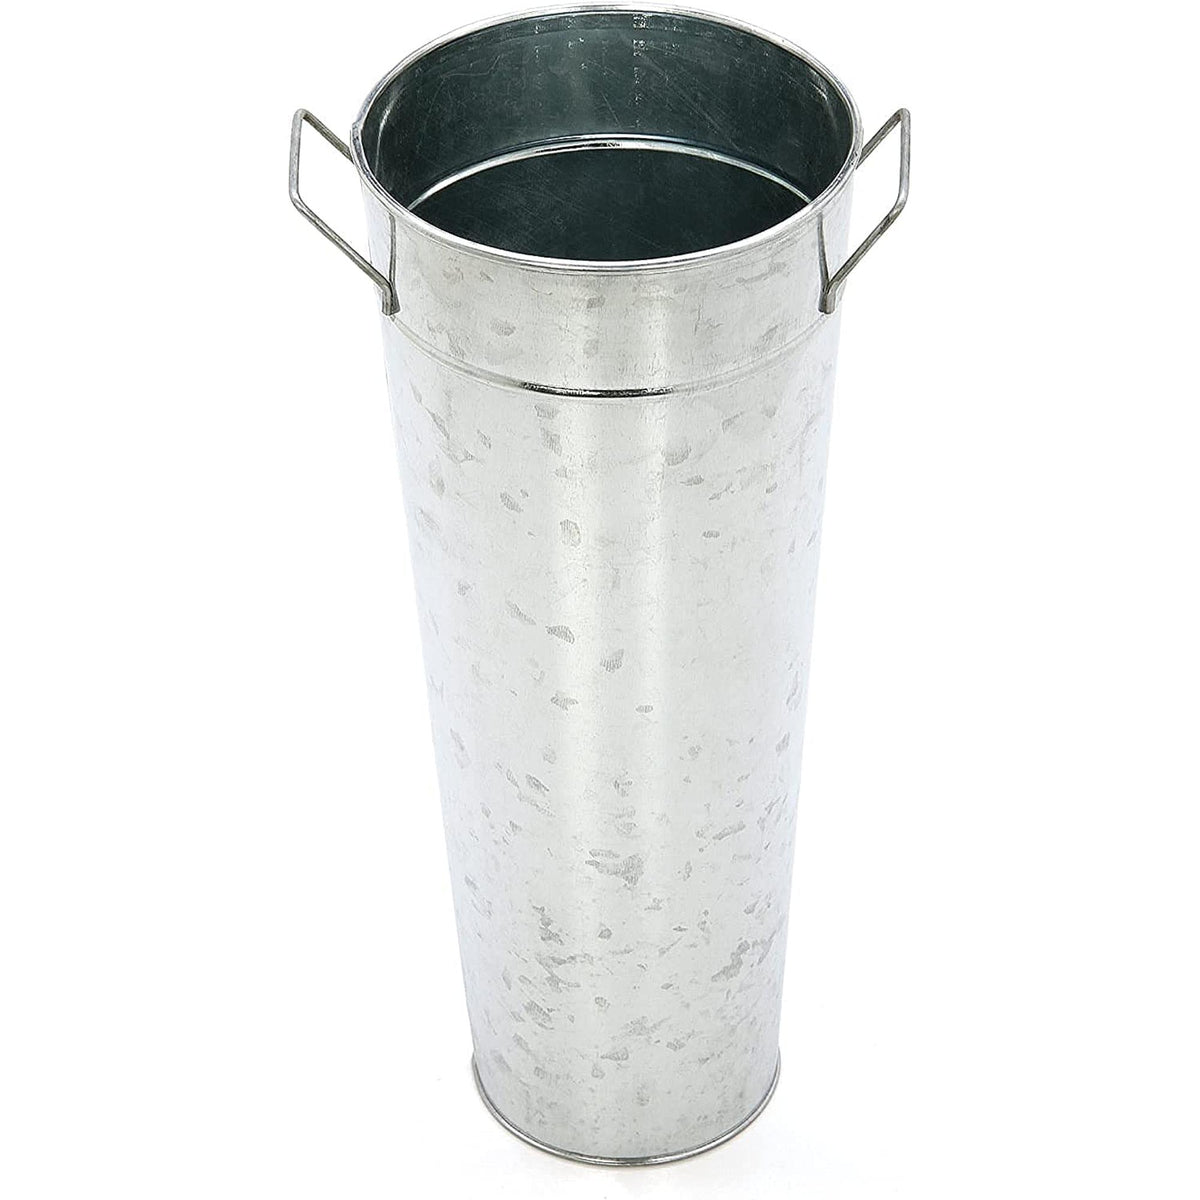 HOSLEY® Iron Galvanized Vase, Set of 3 , 15 inches High each